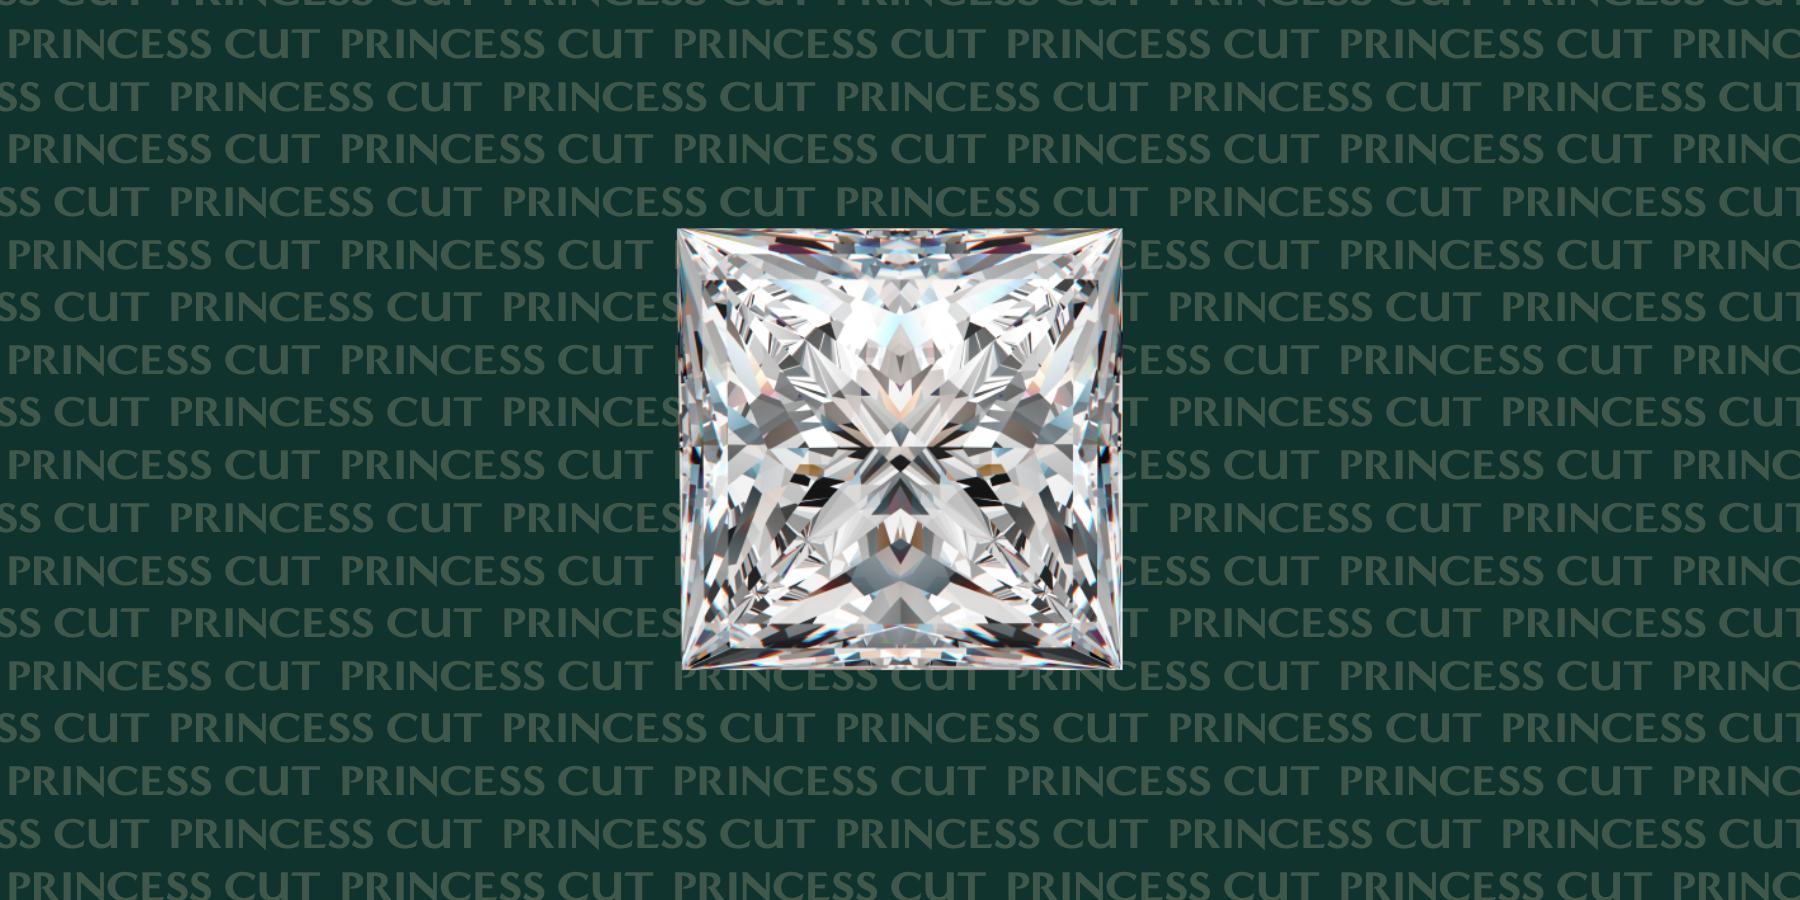 Princess Cut Diamond: Definition, History, Characteristics & More